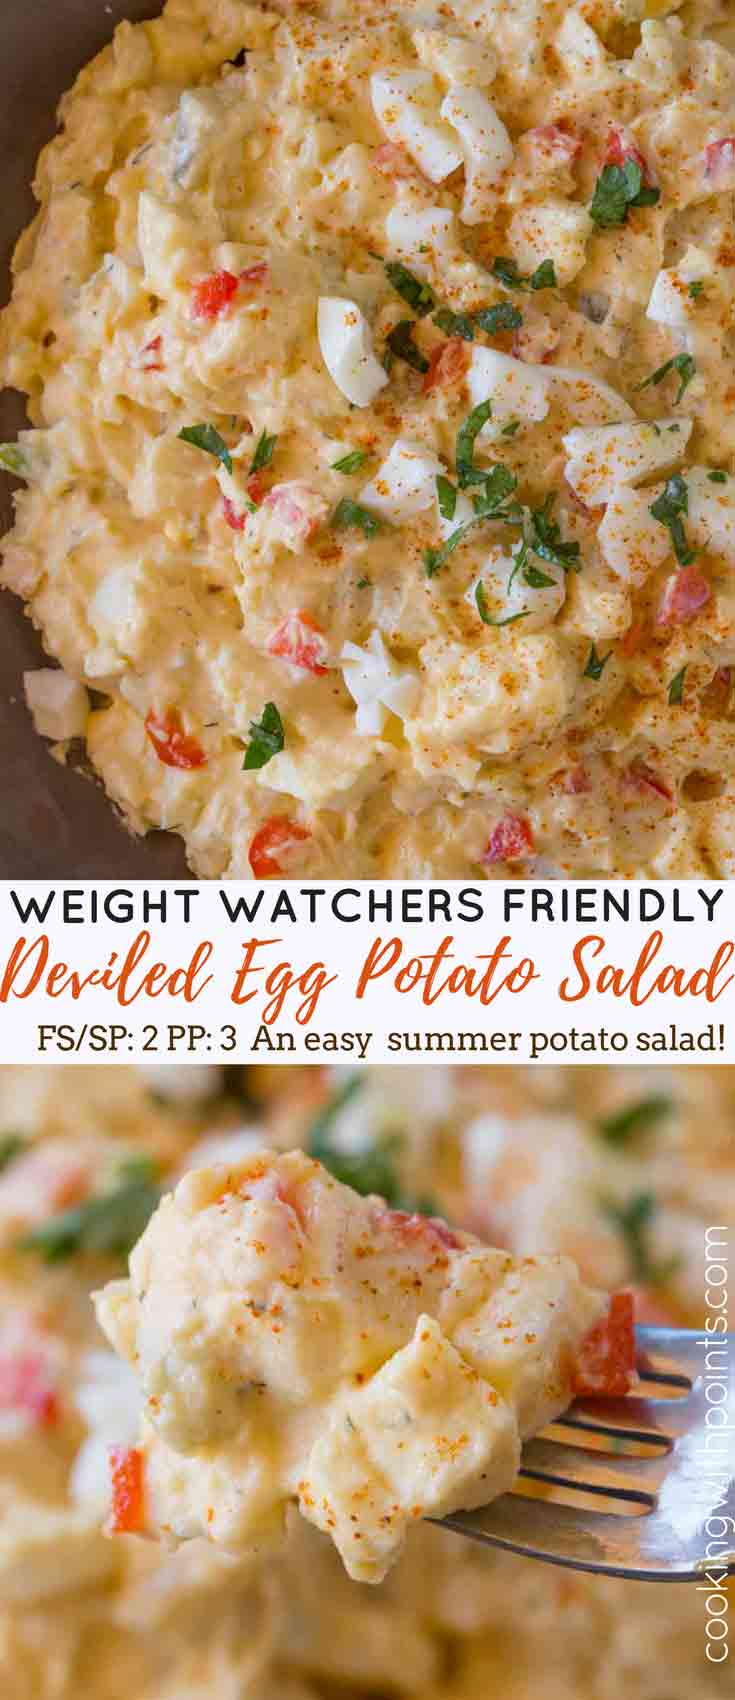 Skinny Deviled Egg Potato Salad Collage Photos